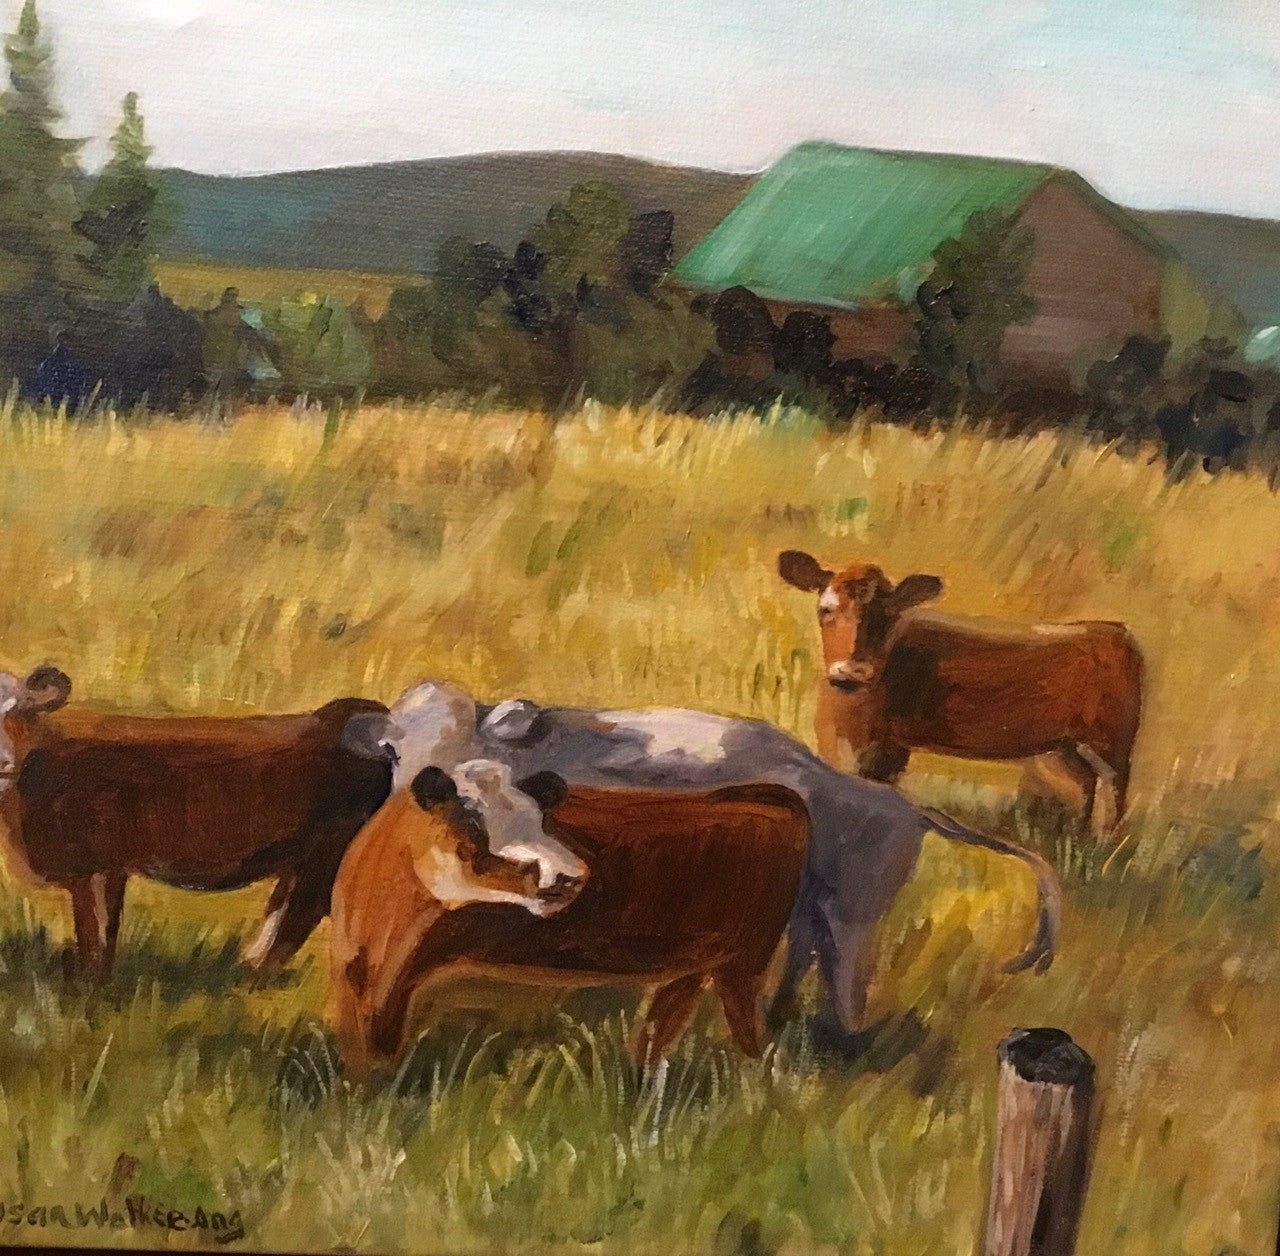 Cows in the farmer's field.